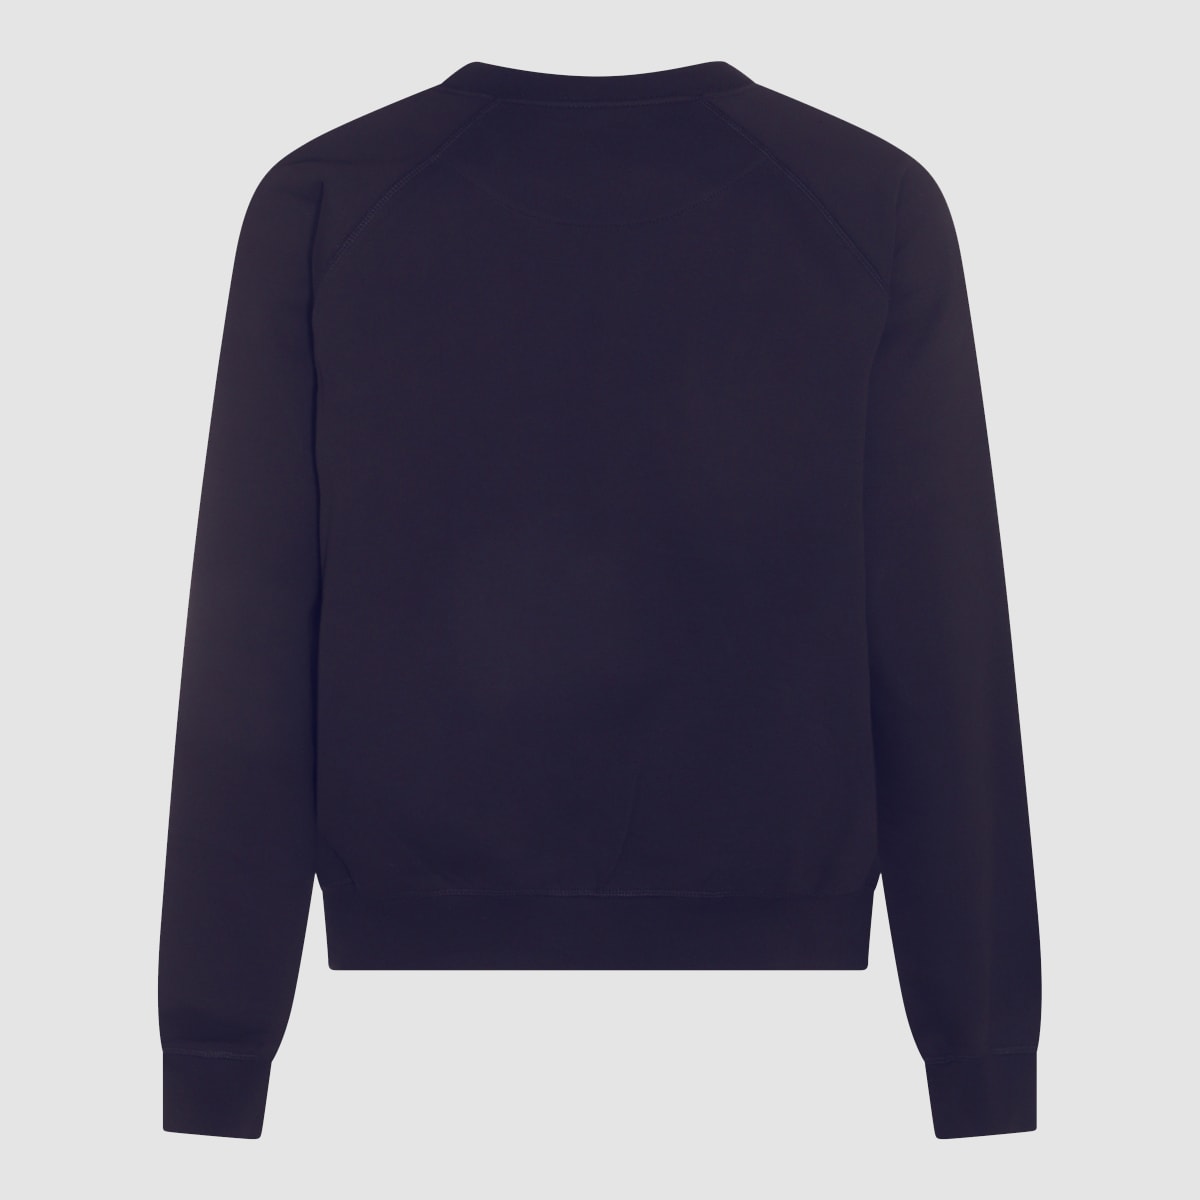 Shop Vivienne Westwood Navy Blue Cotton Sweatshirt